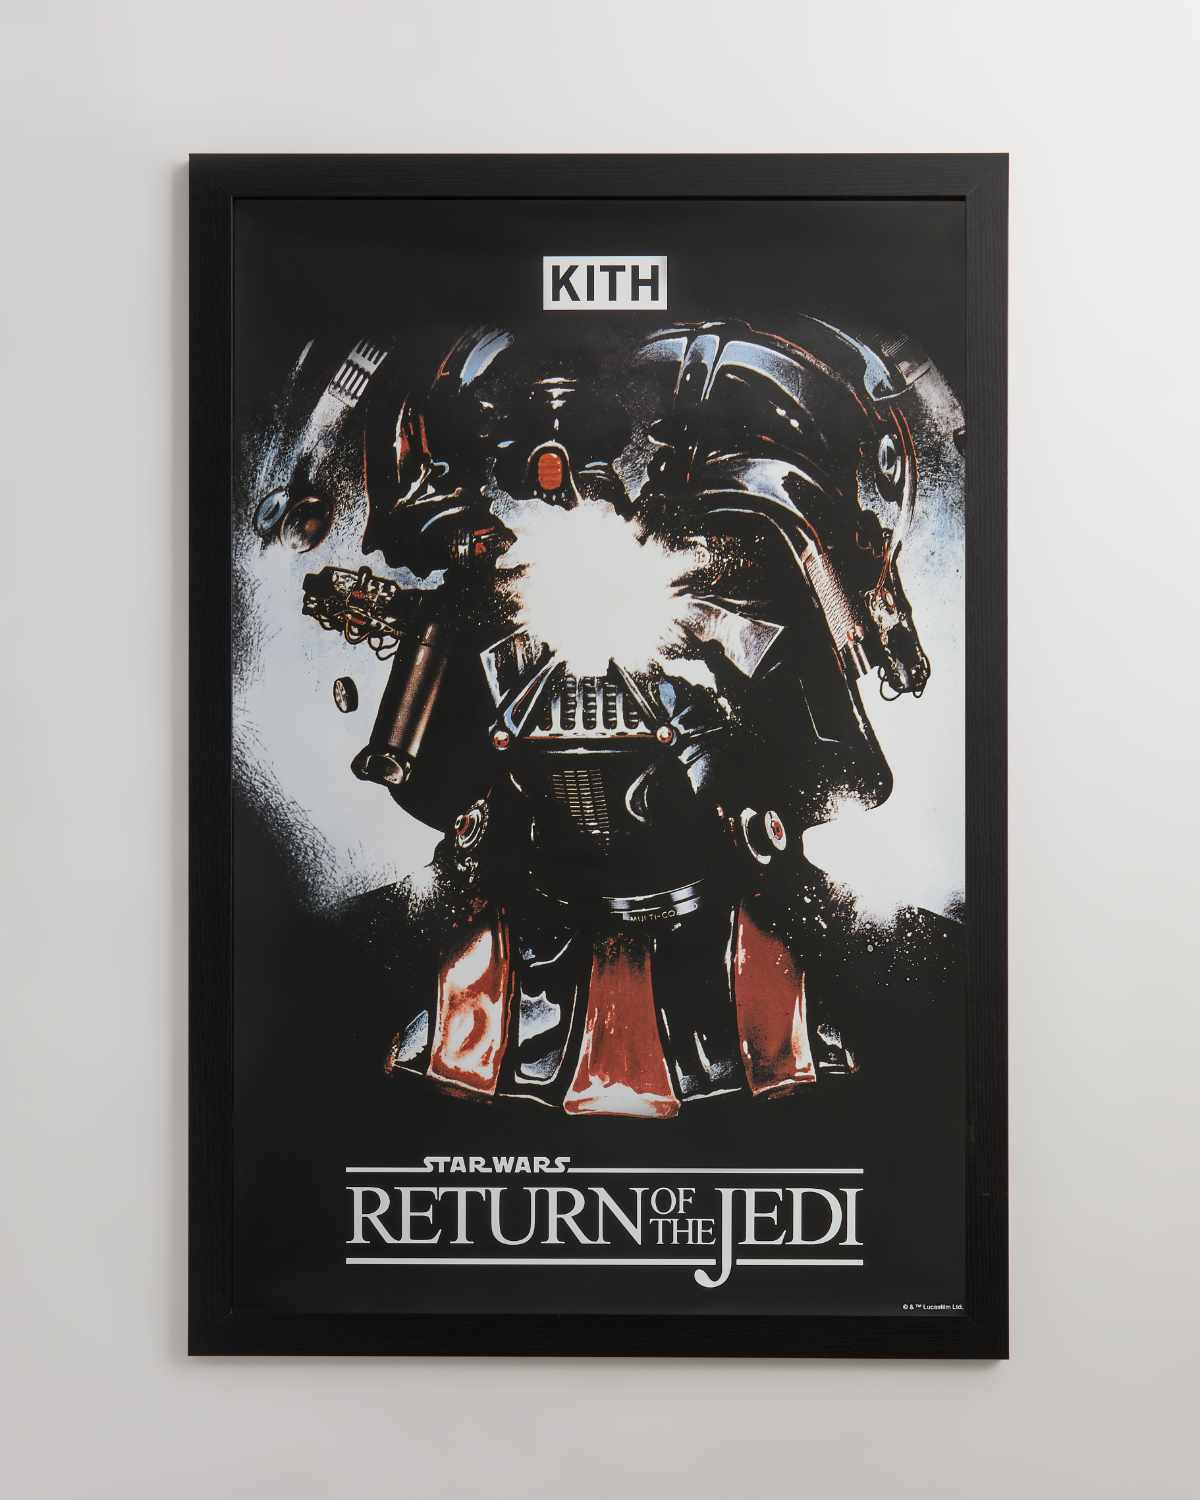 Ronnie Fieg on KITH's 'Star Wars: Return of the Jedi' Collab